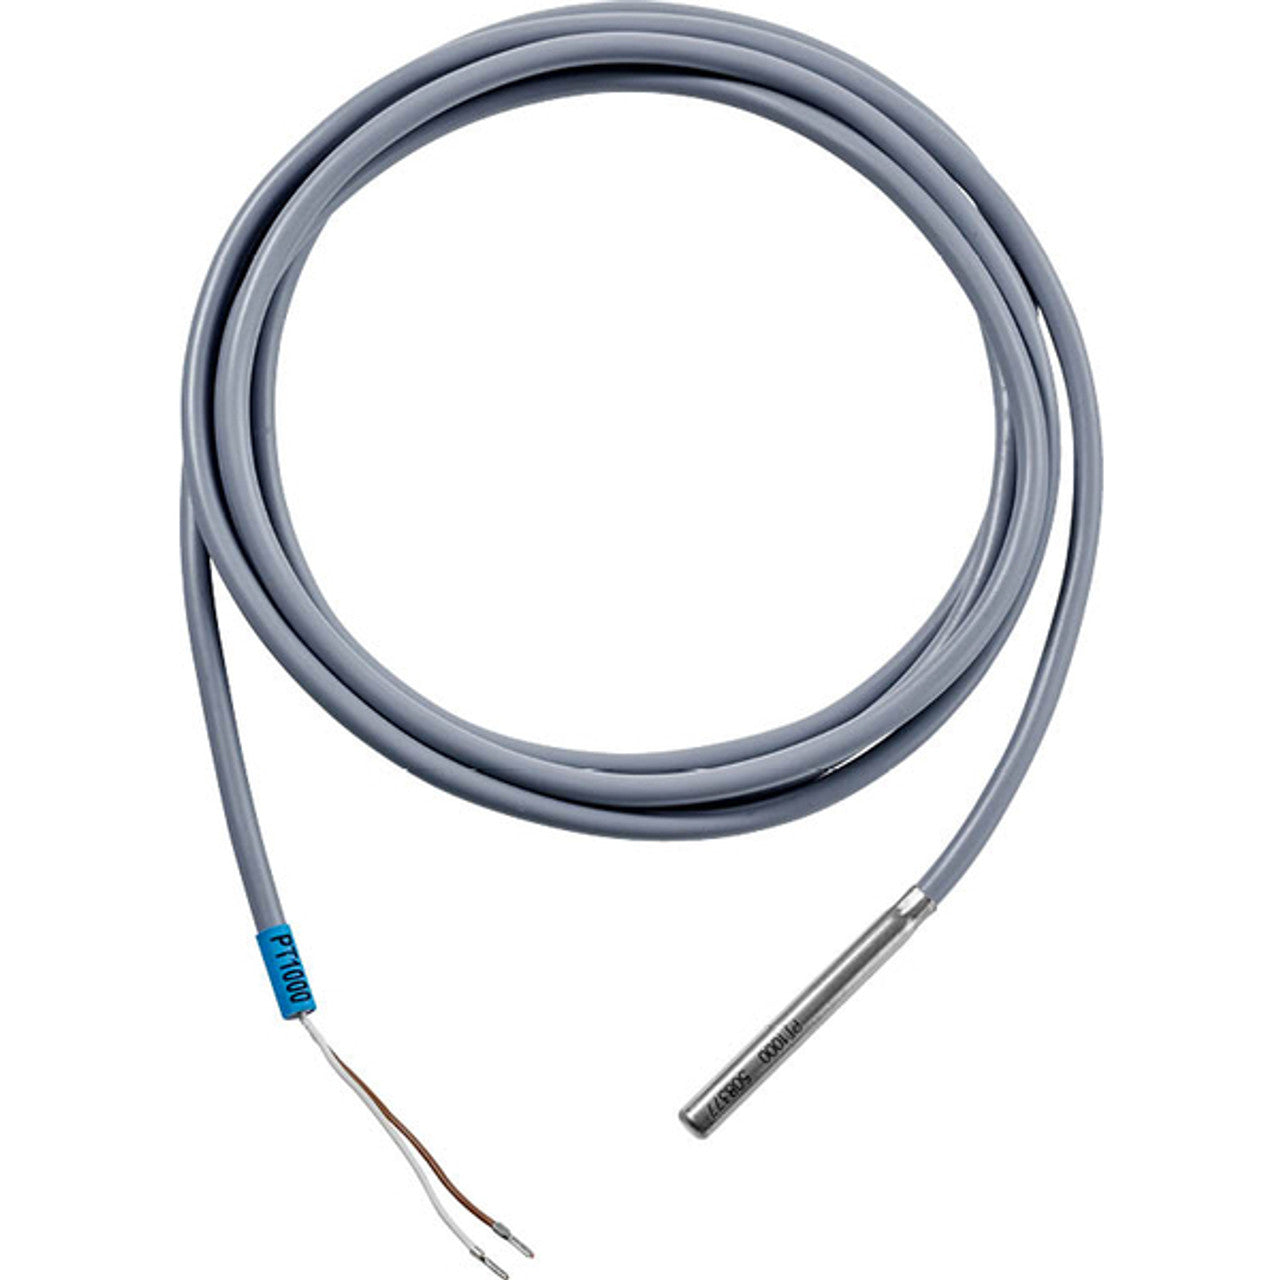 Belimo Cable Temperature Sensor PT1000 50 mm Probe Length Cable 2m HVAC